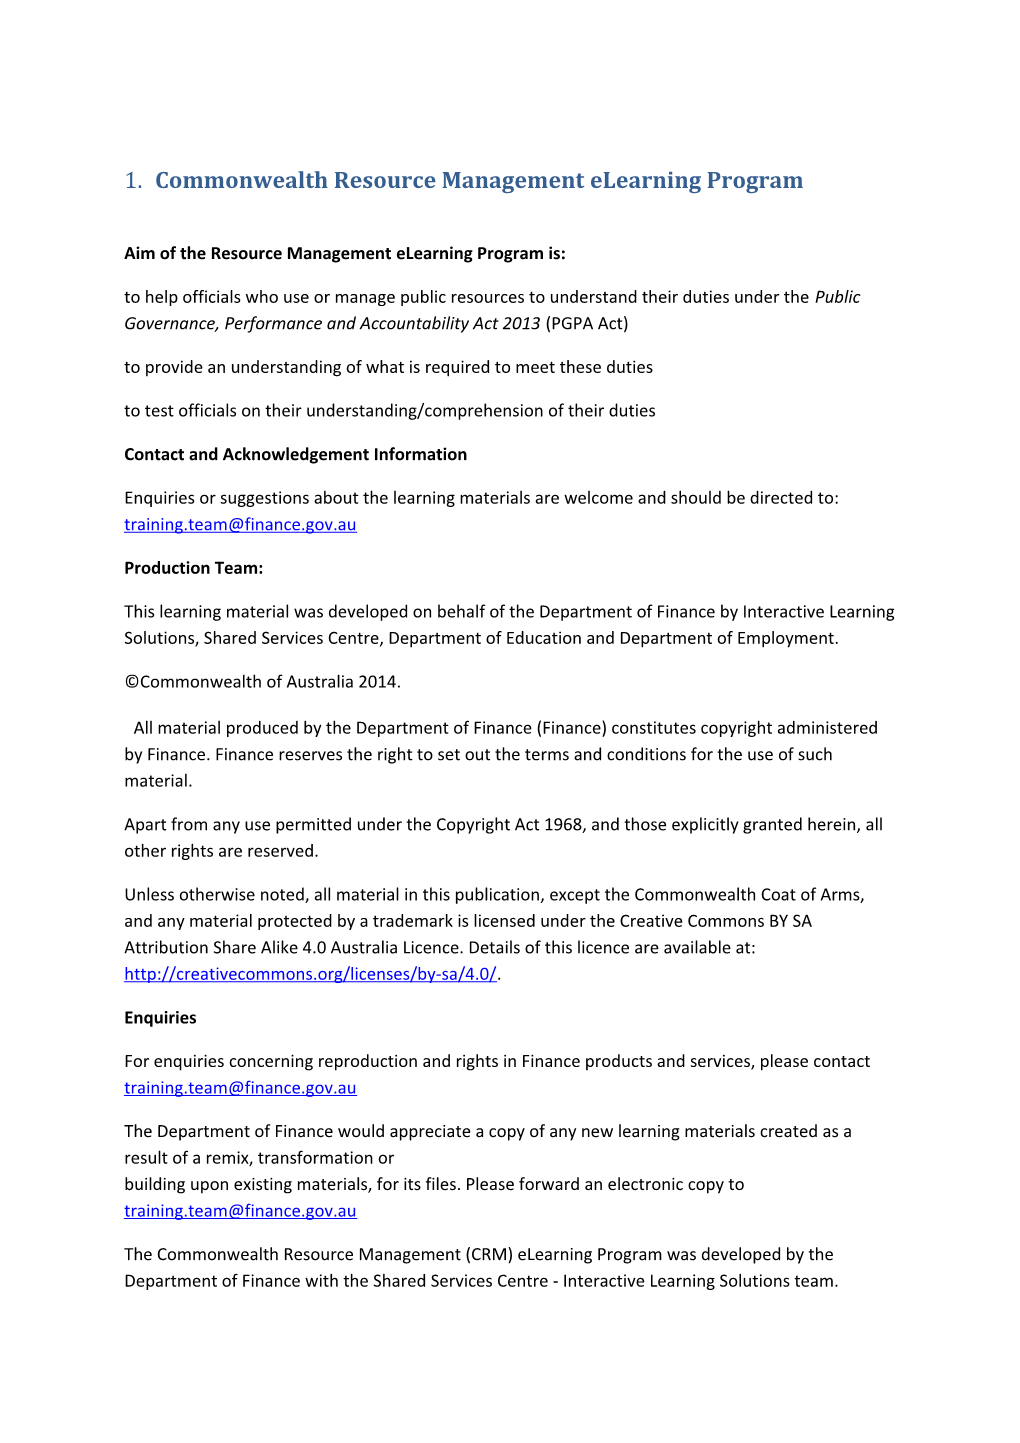 Commonwealth Resource Management Elearning Program